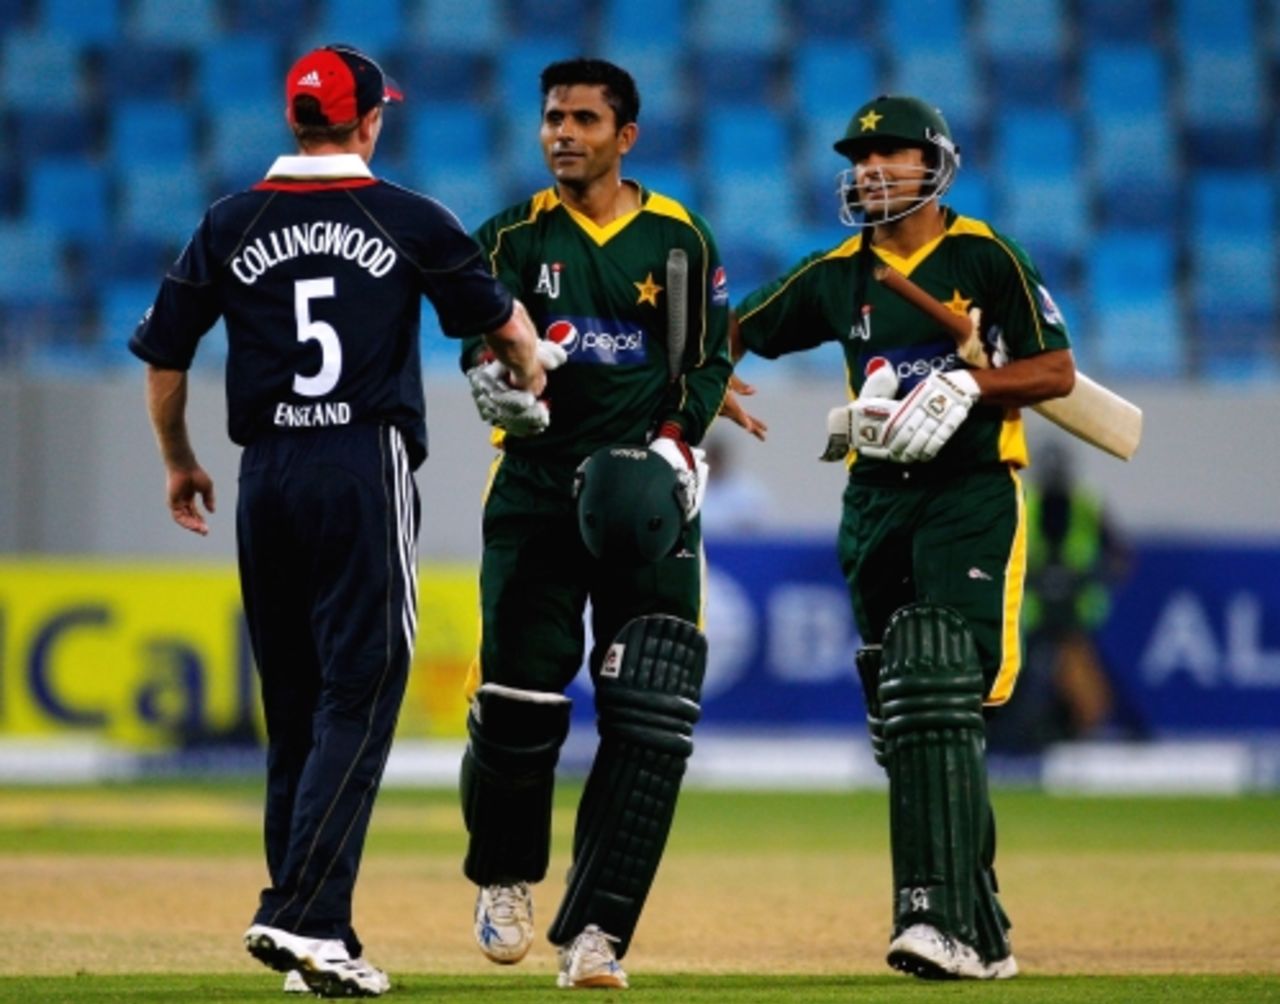 Abdul Razzaq is congratulated by Paul Collingwood, England's captain, after his match-winning innings, England v Pakistan, 2nd Twenty20, Dubai, February 20, 2010